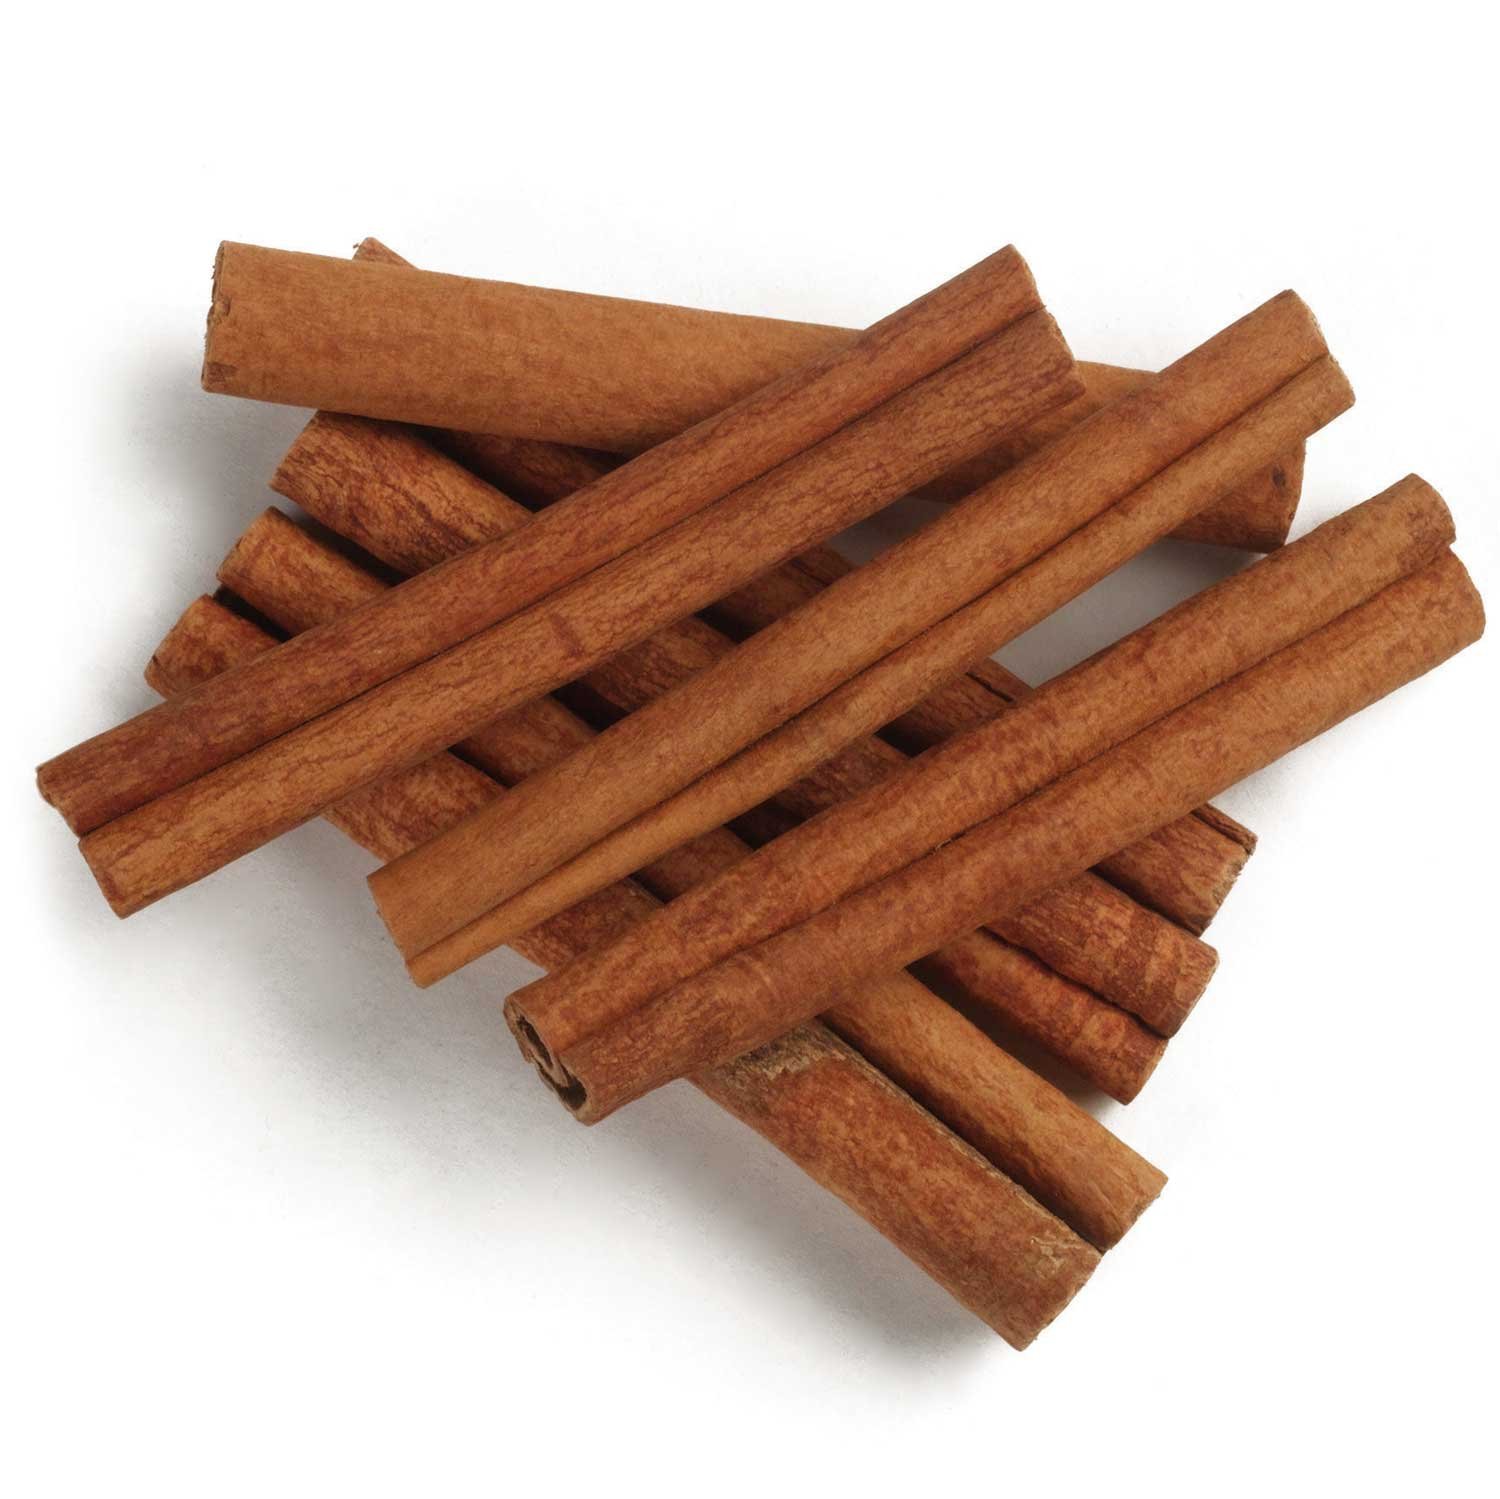 Amazon.com : Frontier Co-op Korintje Cinnamon Sticks 2 3/4